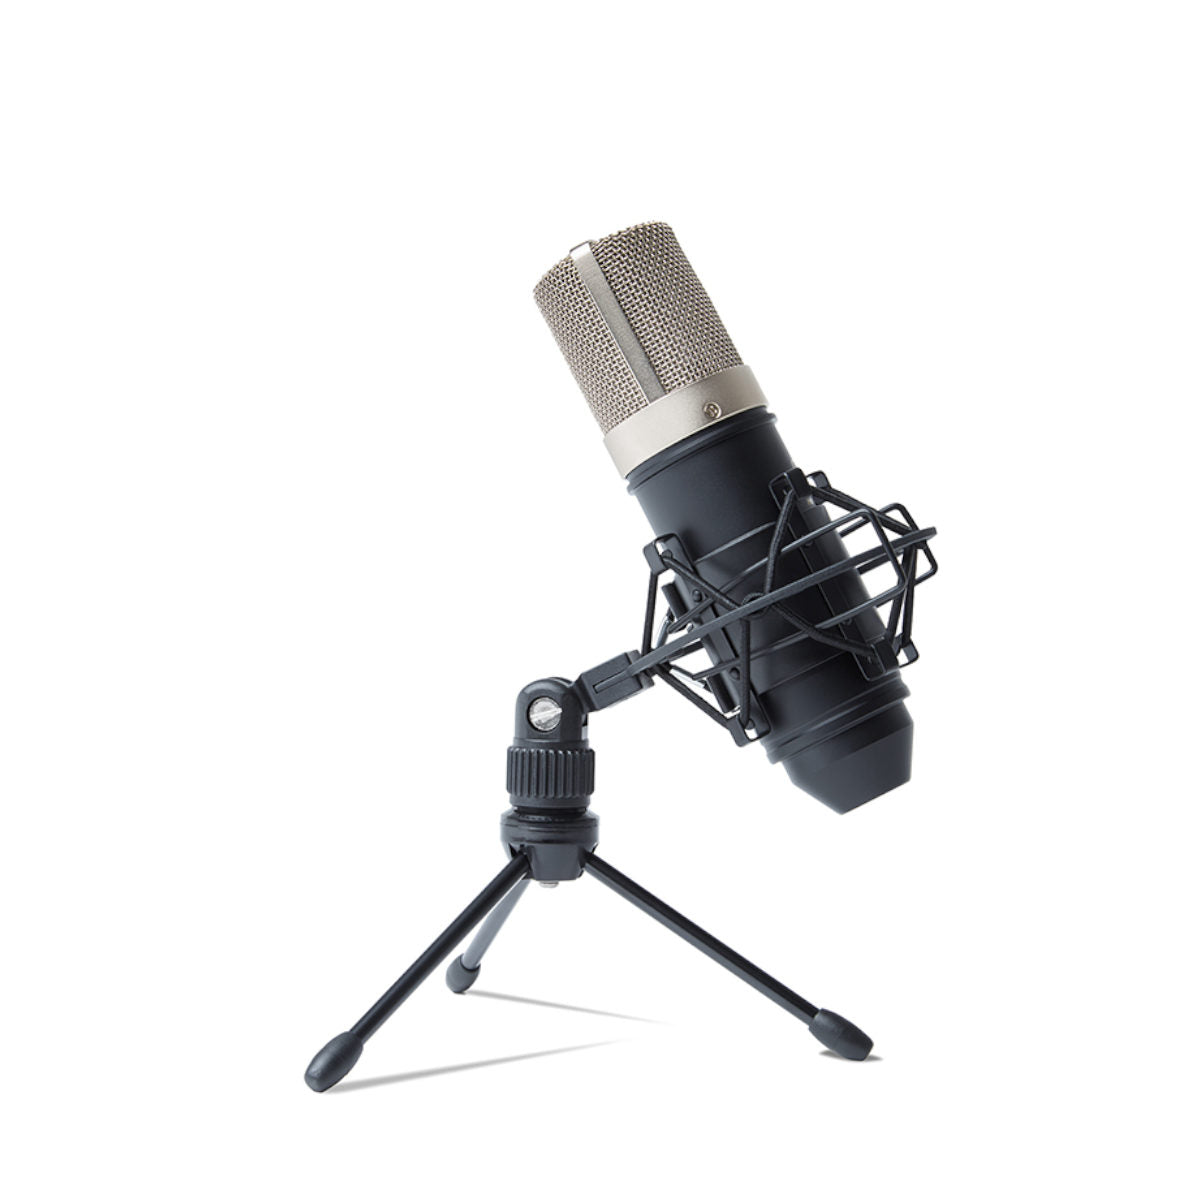 Marantz Professional MPM-1000 Studio Recording Condenser Microphone with Shockmount - Ooberpad India